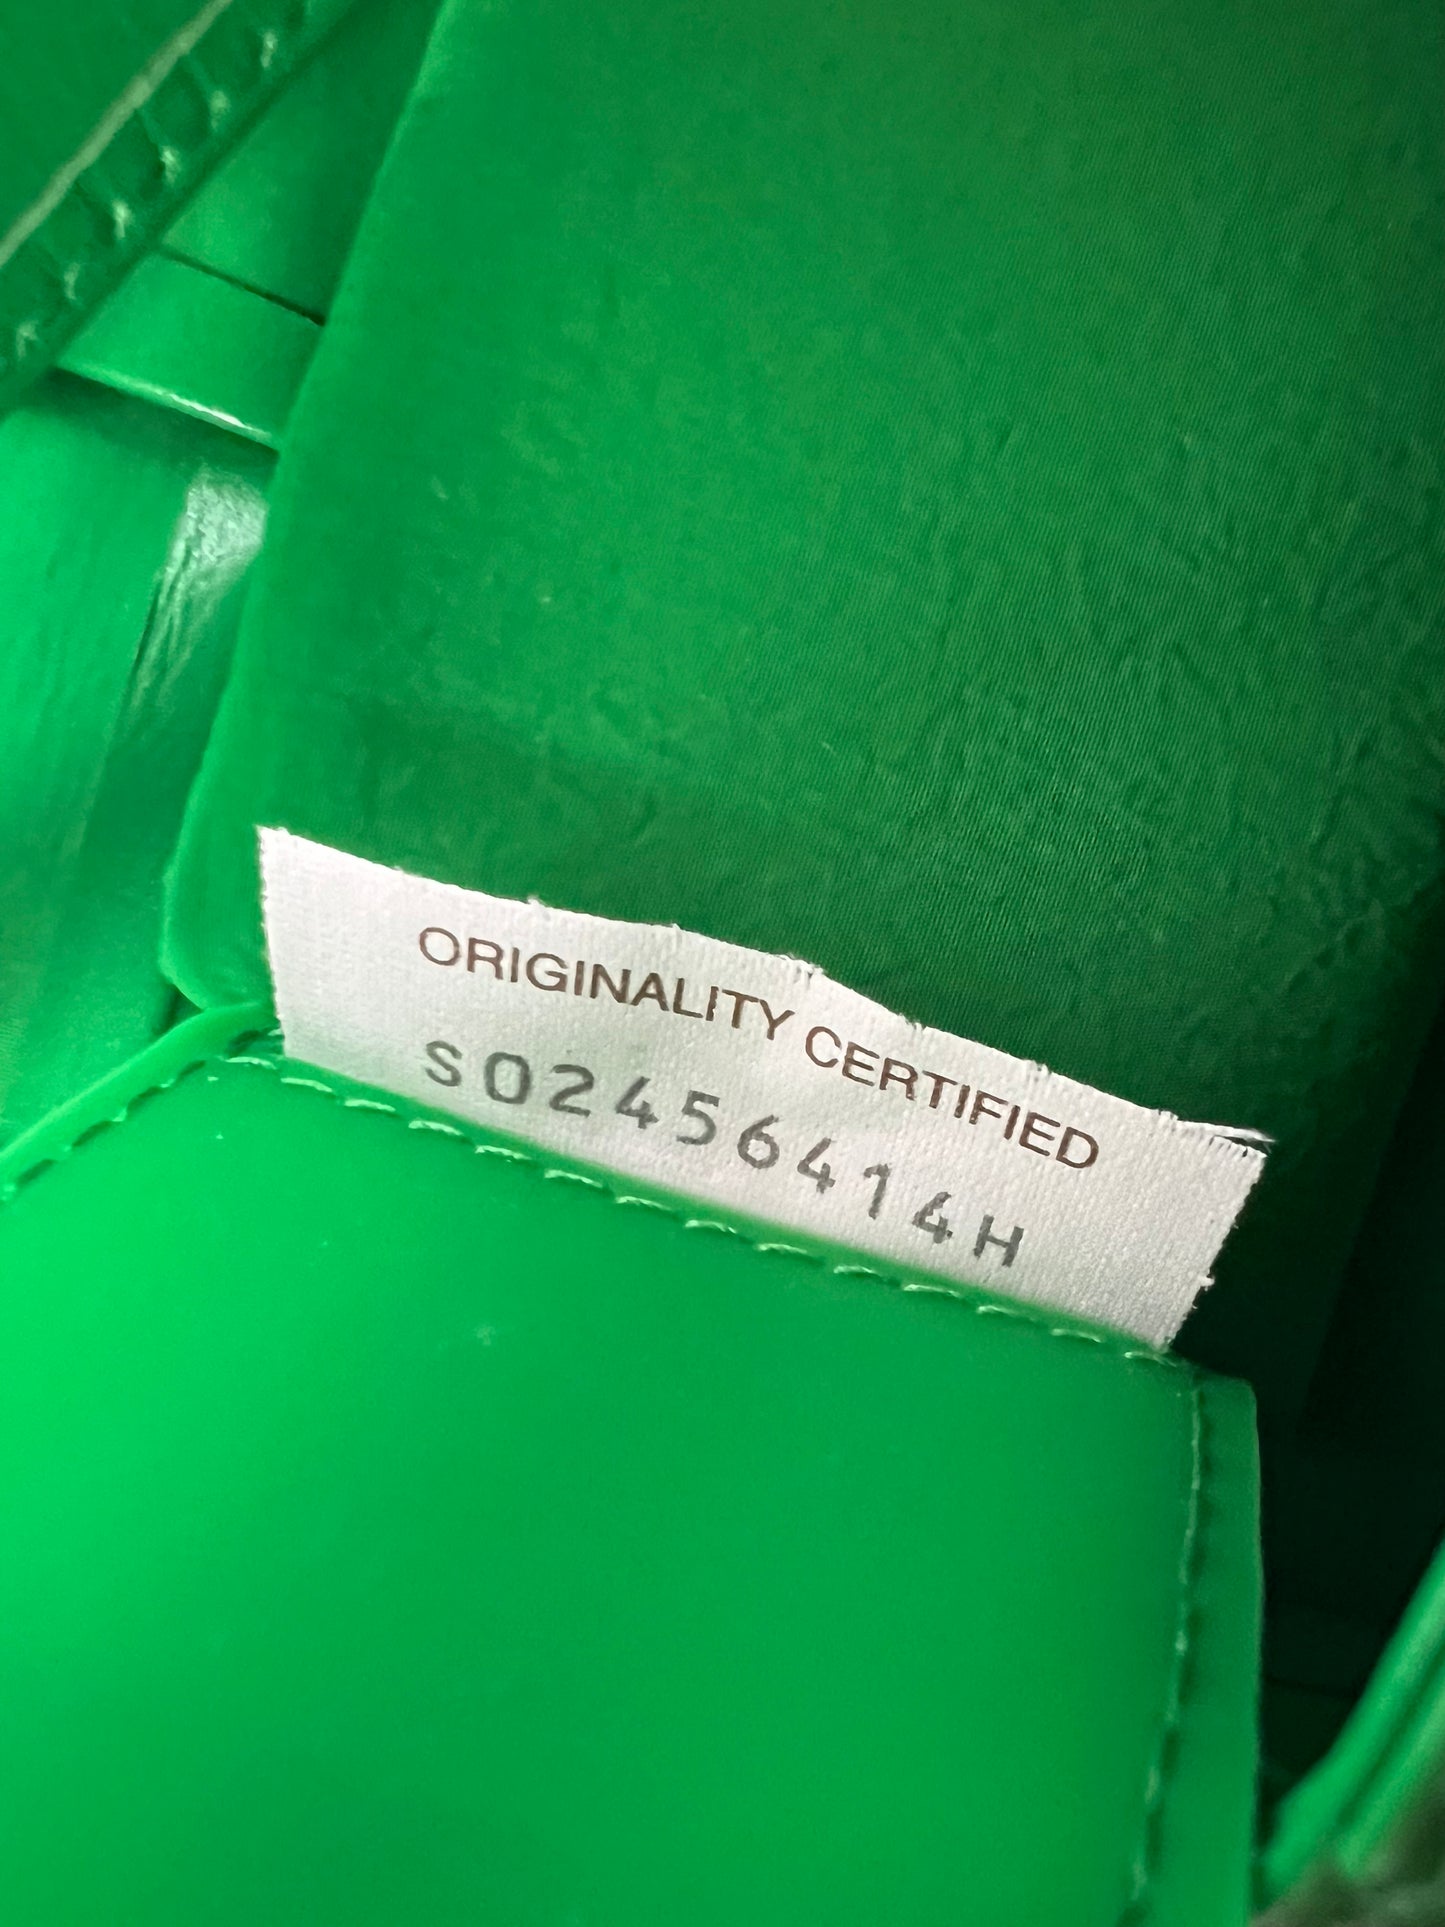 Bottega Veneta mini cassette intrecciato bag in green SZ:OS